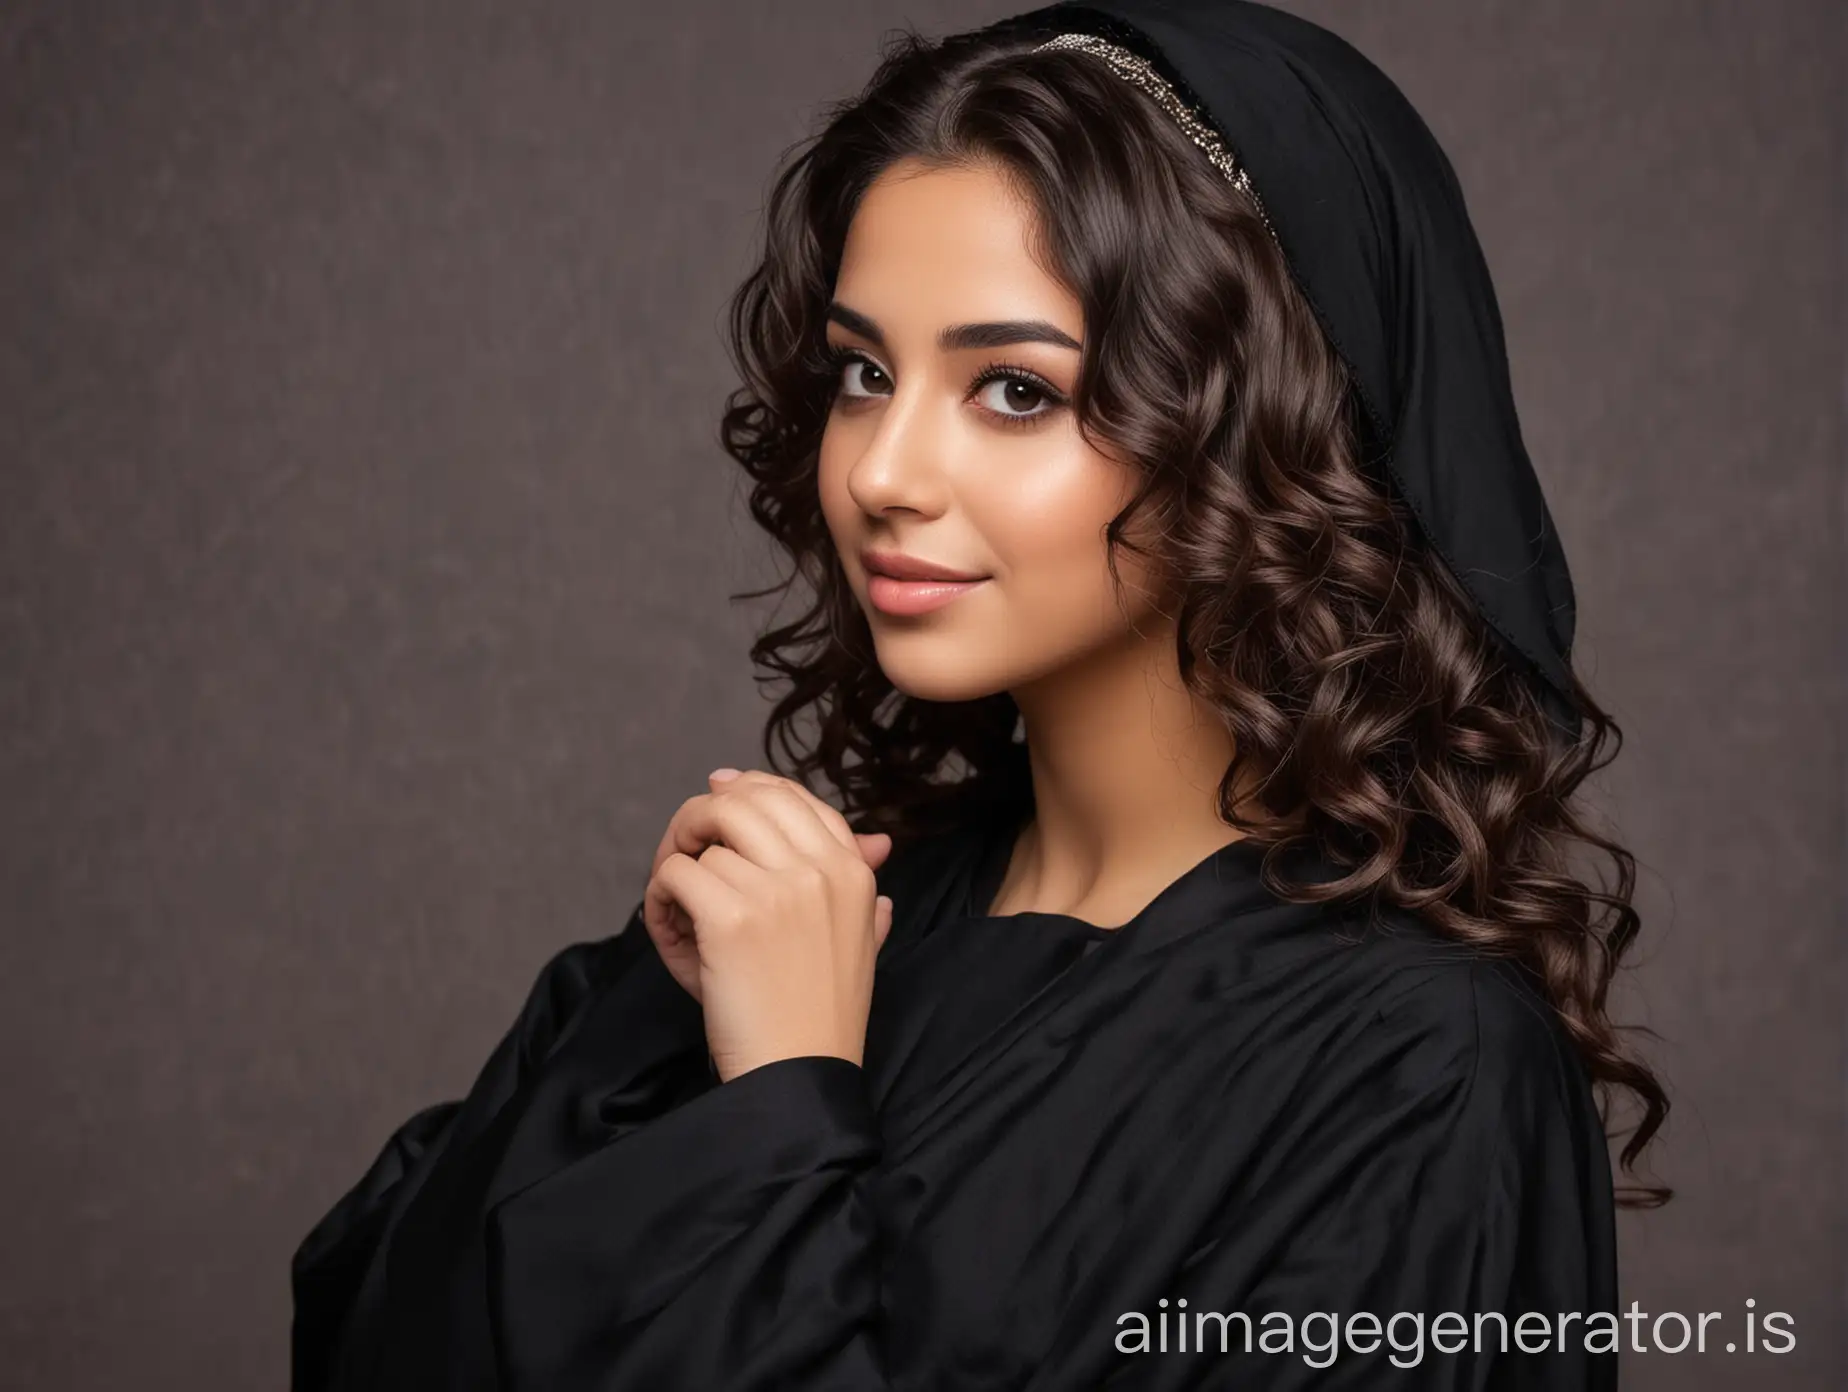 Beautiful Arab girl with wavy hair wearing black abaya